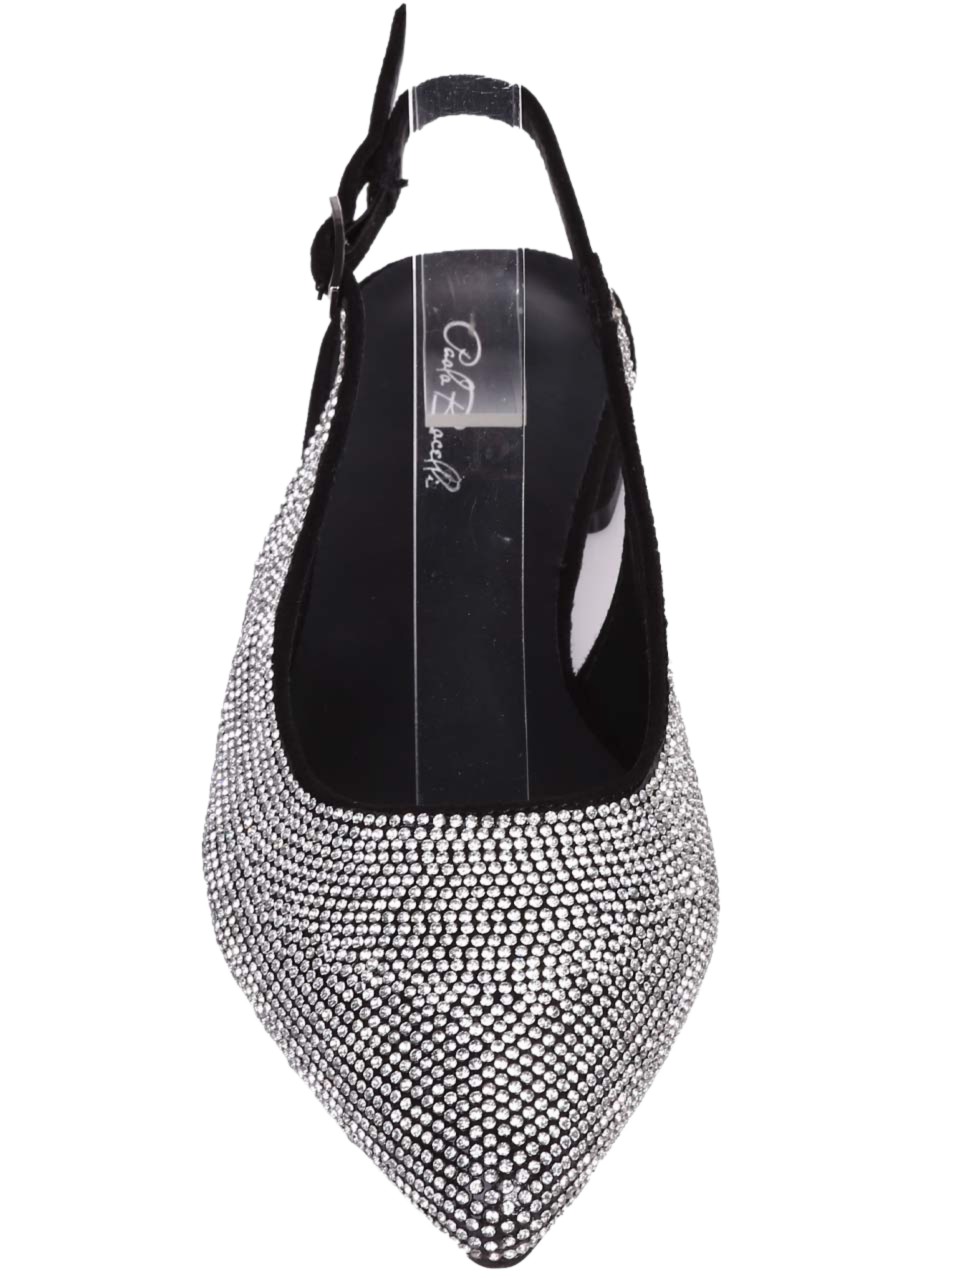 Дамски равни обувки, обсипани с декоративни камъни 3H-24210 black